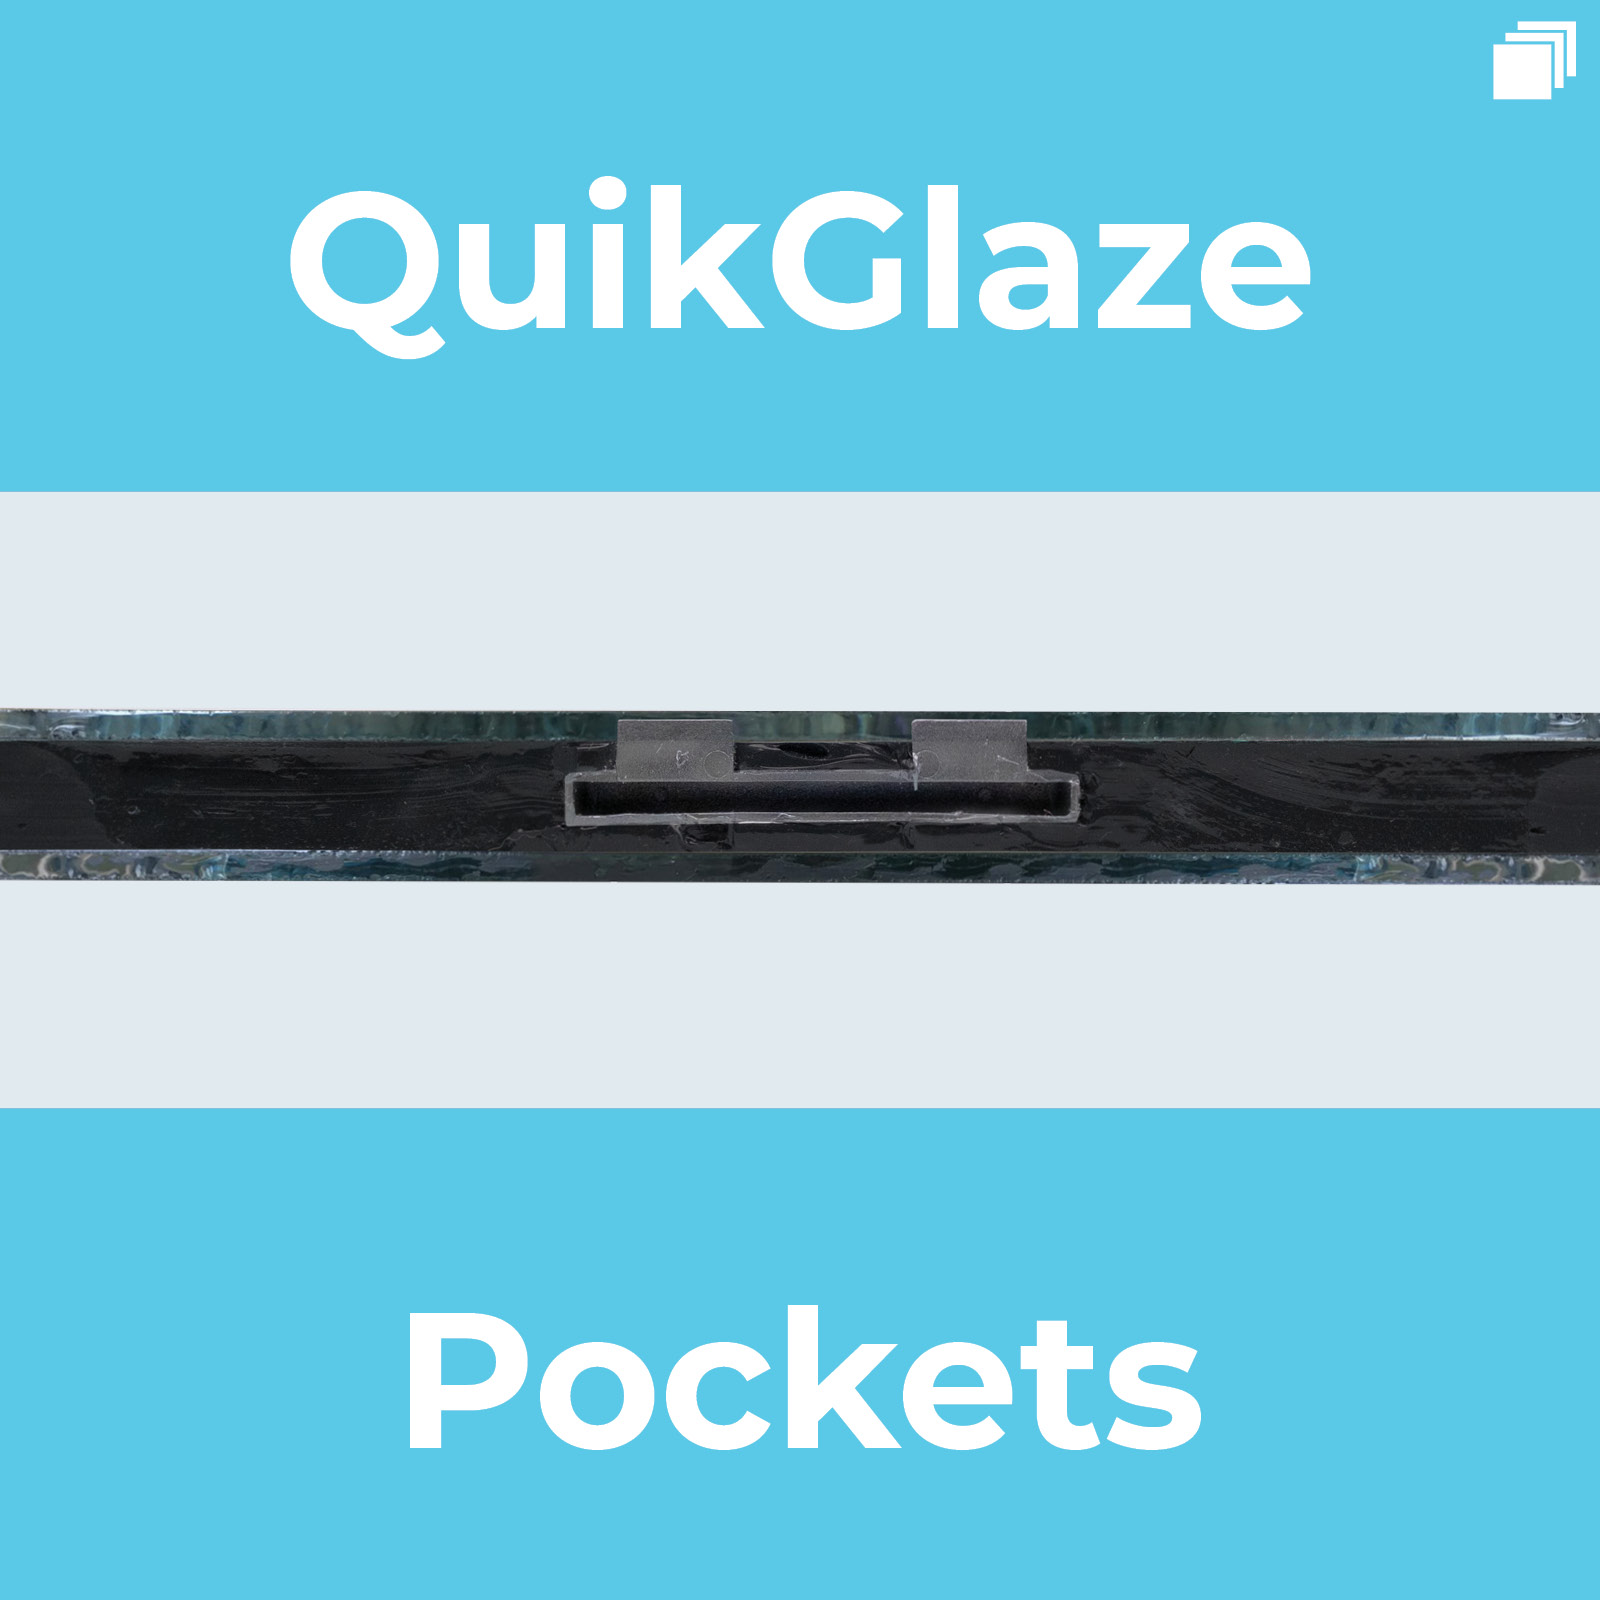 The New QuikGlaze Pocket System